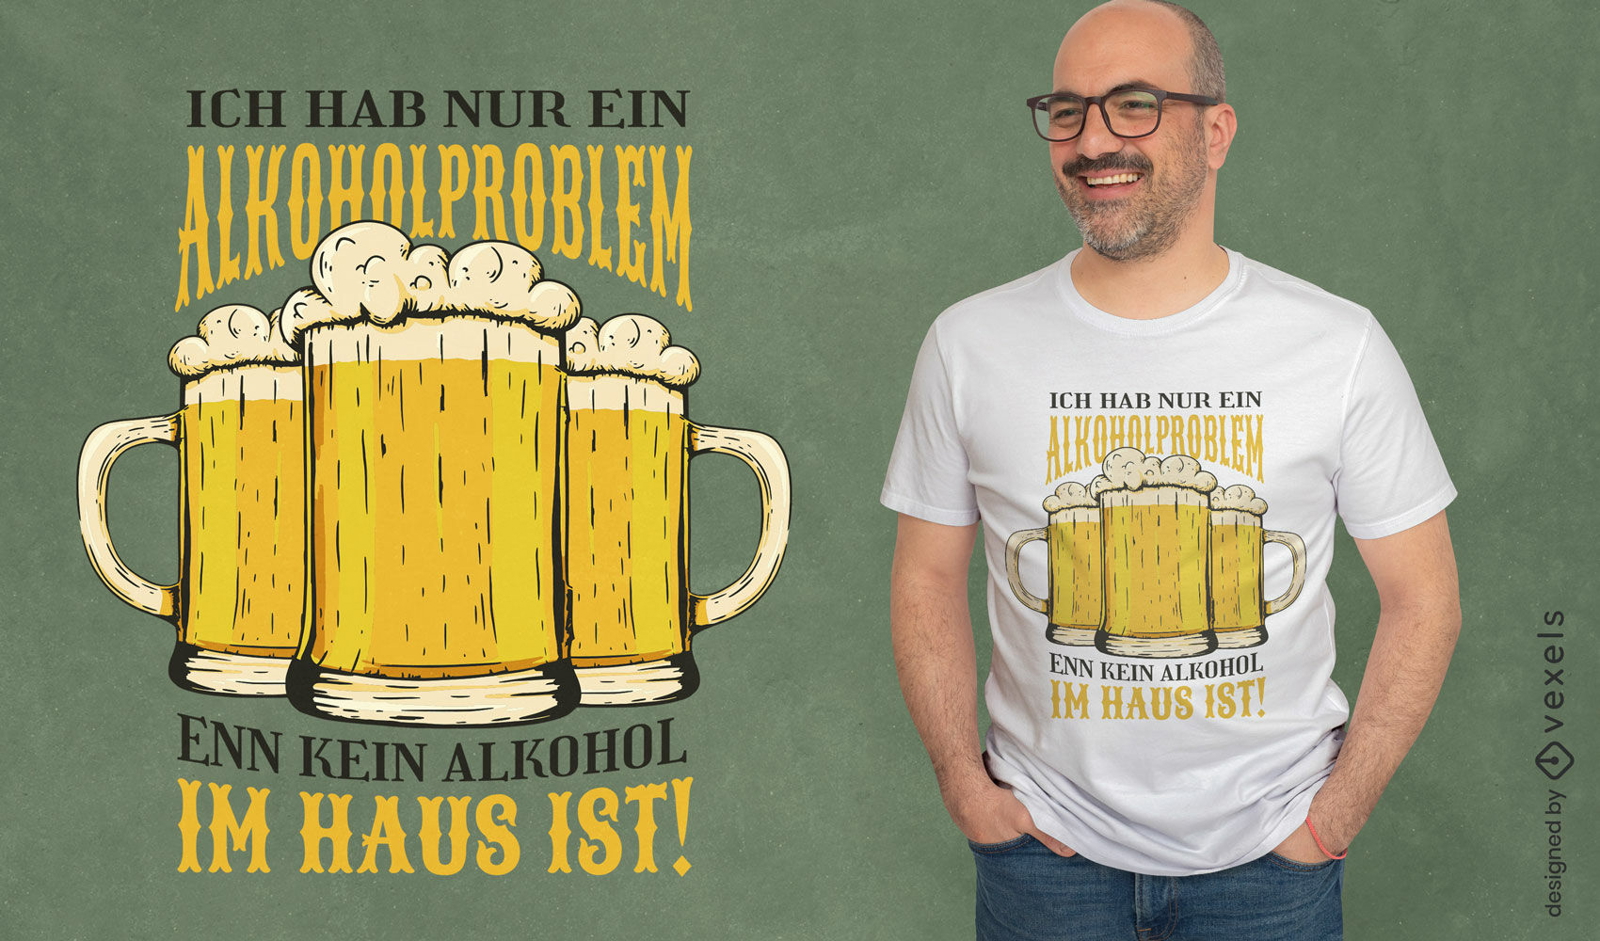 Diseño divertido de la camiseta de la cita del alcohol de la cerveza